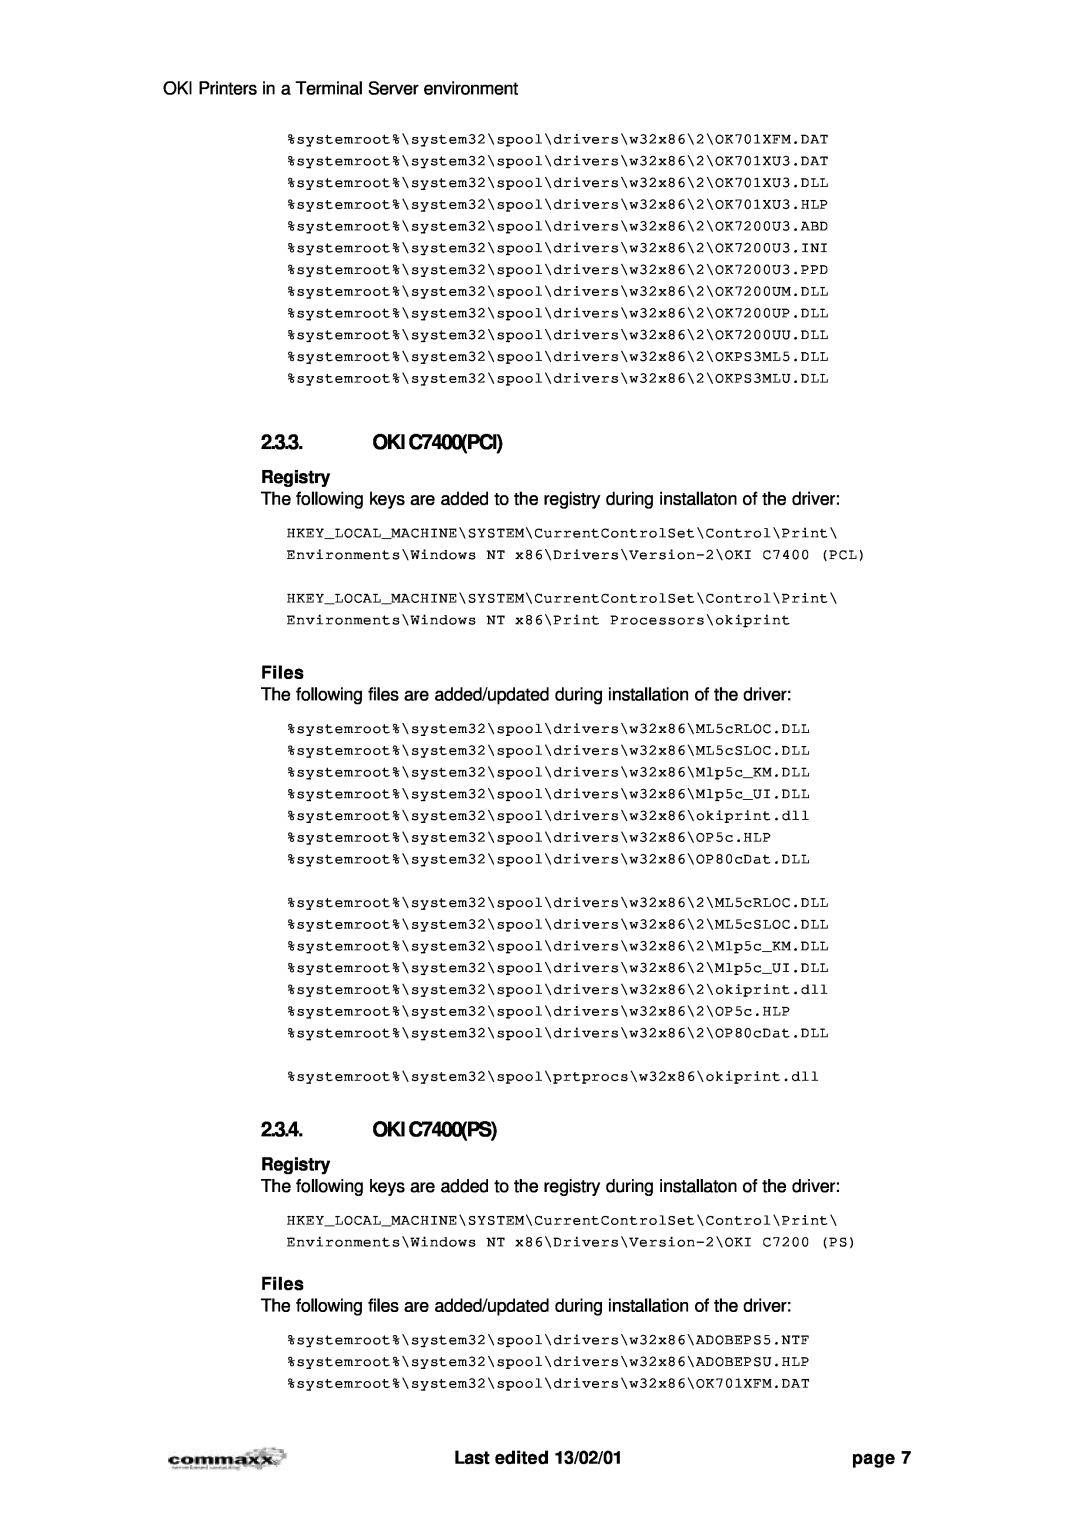 Oki 7200 manual OKI C7400PCI, OKI C7400PS, Registry, Files, Last edited 13/02/01, page 